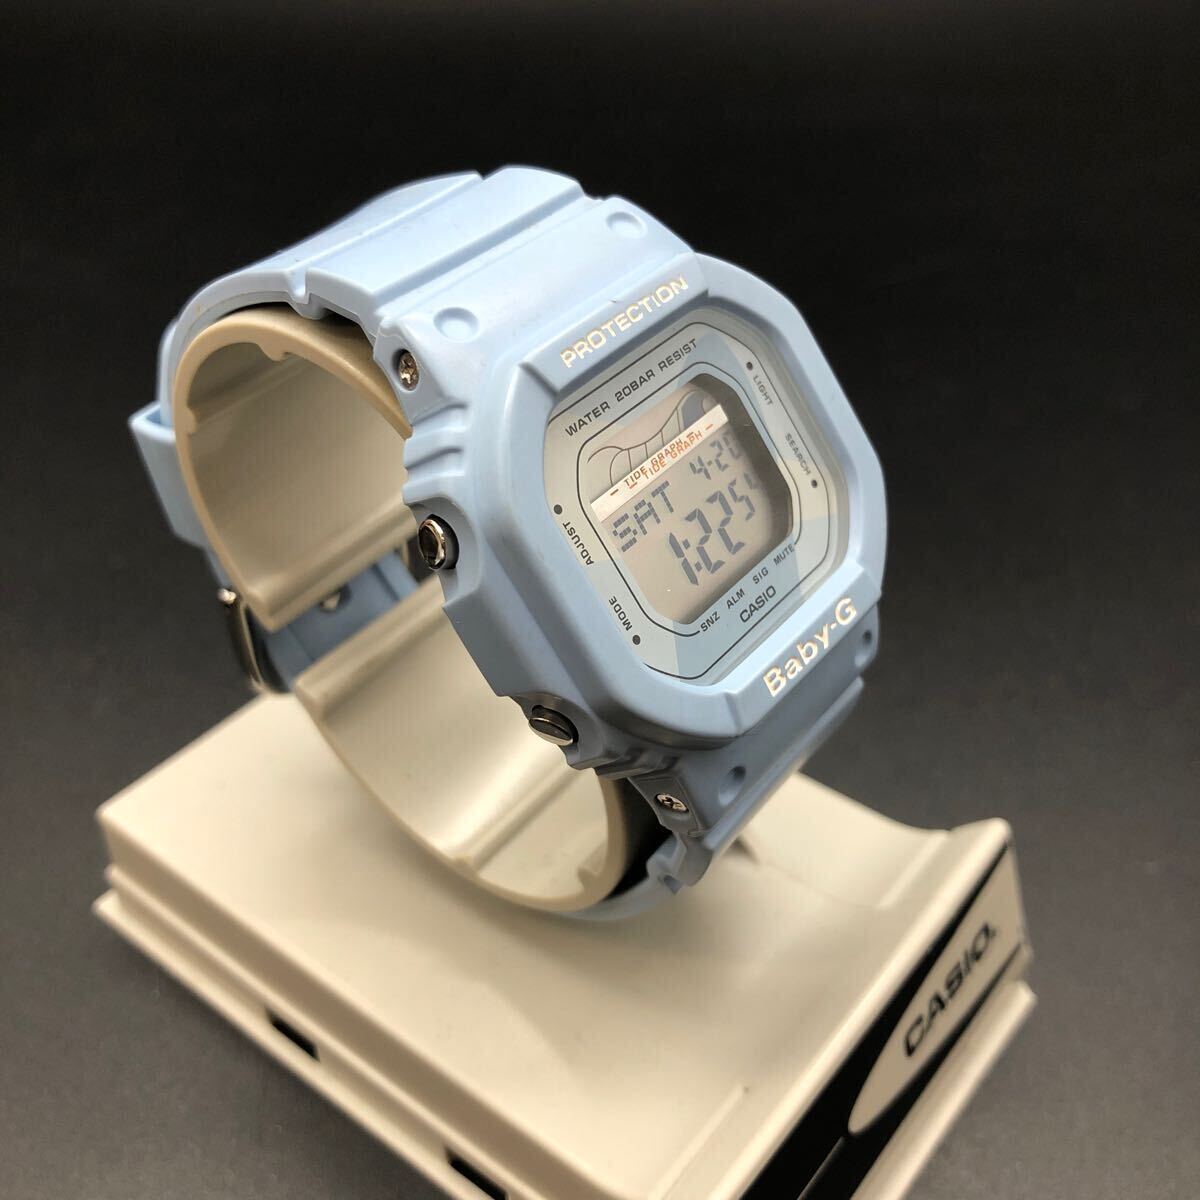   блиц-цена  CASIO  casio   Baby-G  наручные часы  BLX-560